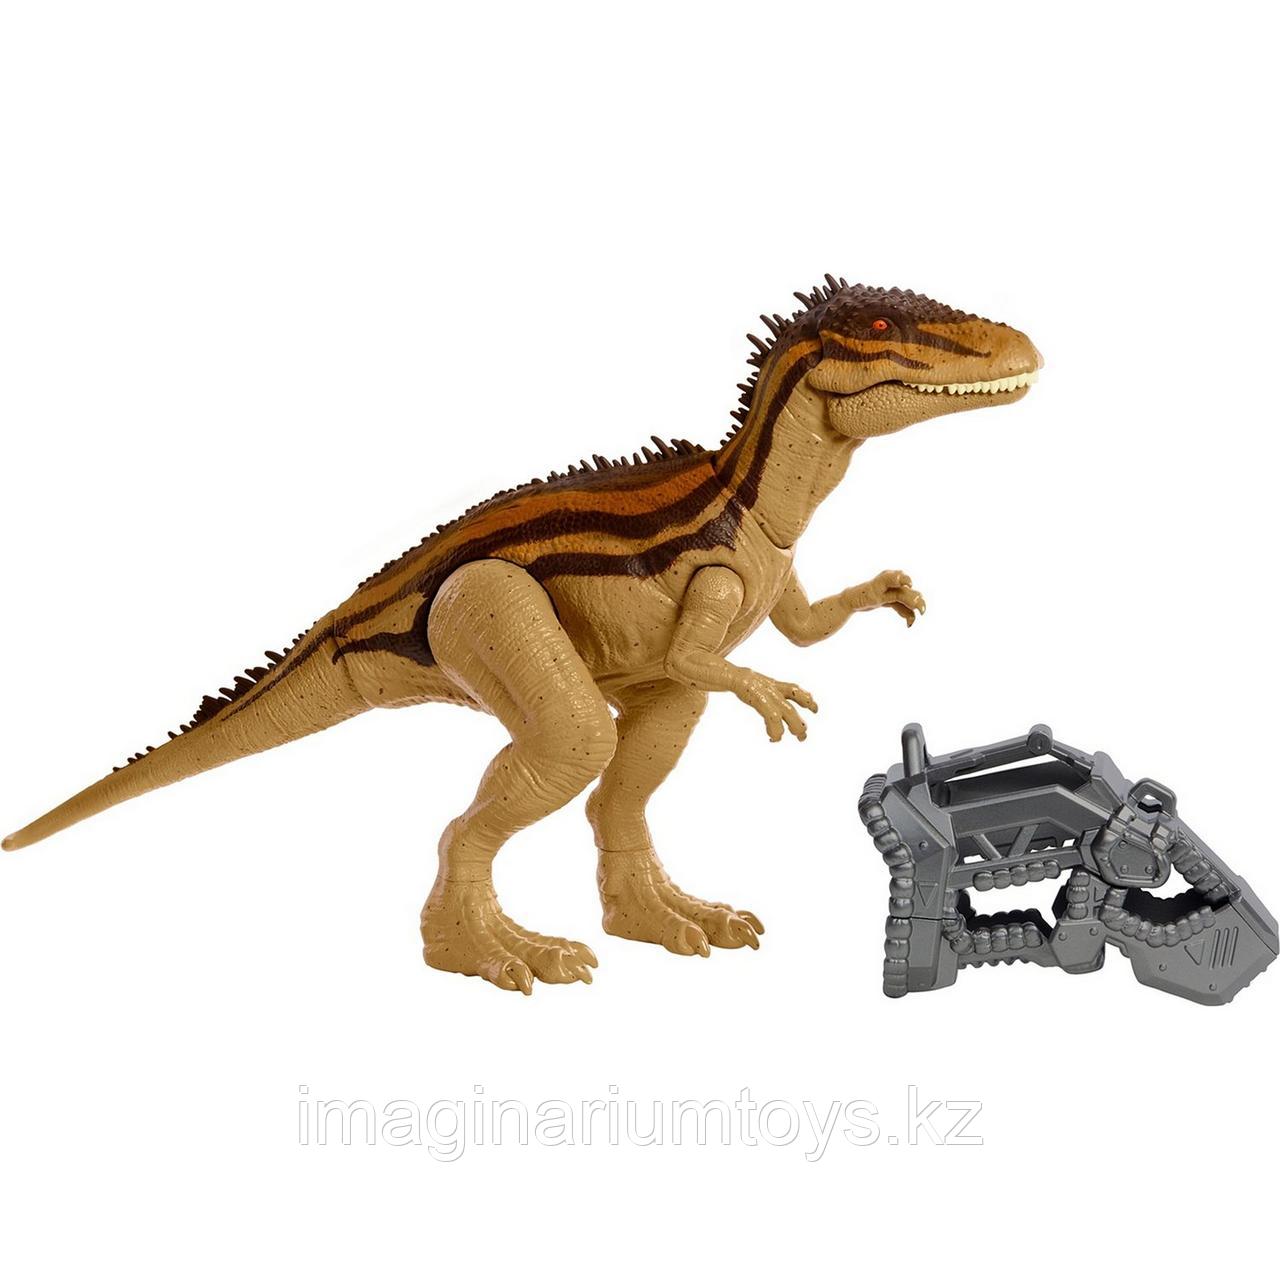 Динозавр Jurassic World Кархародонтозавр Мегаразрушитель 30 см